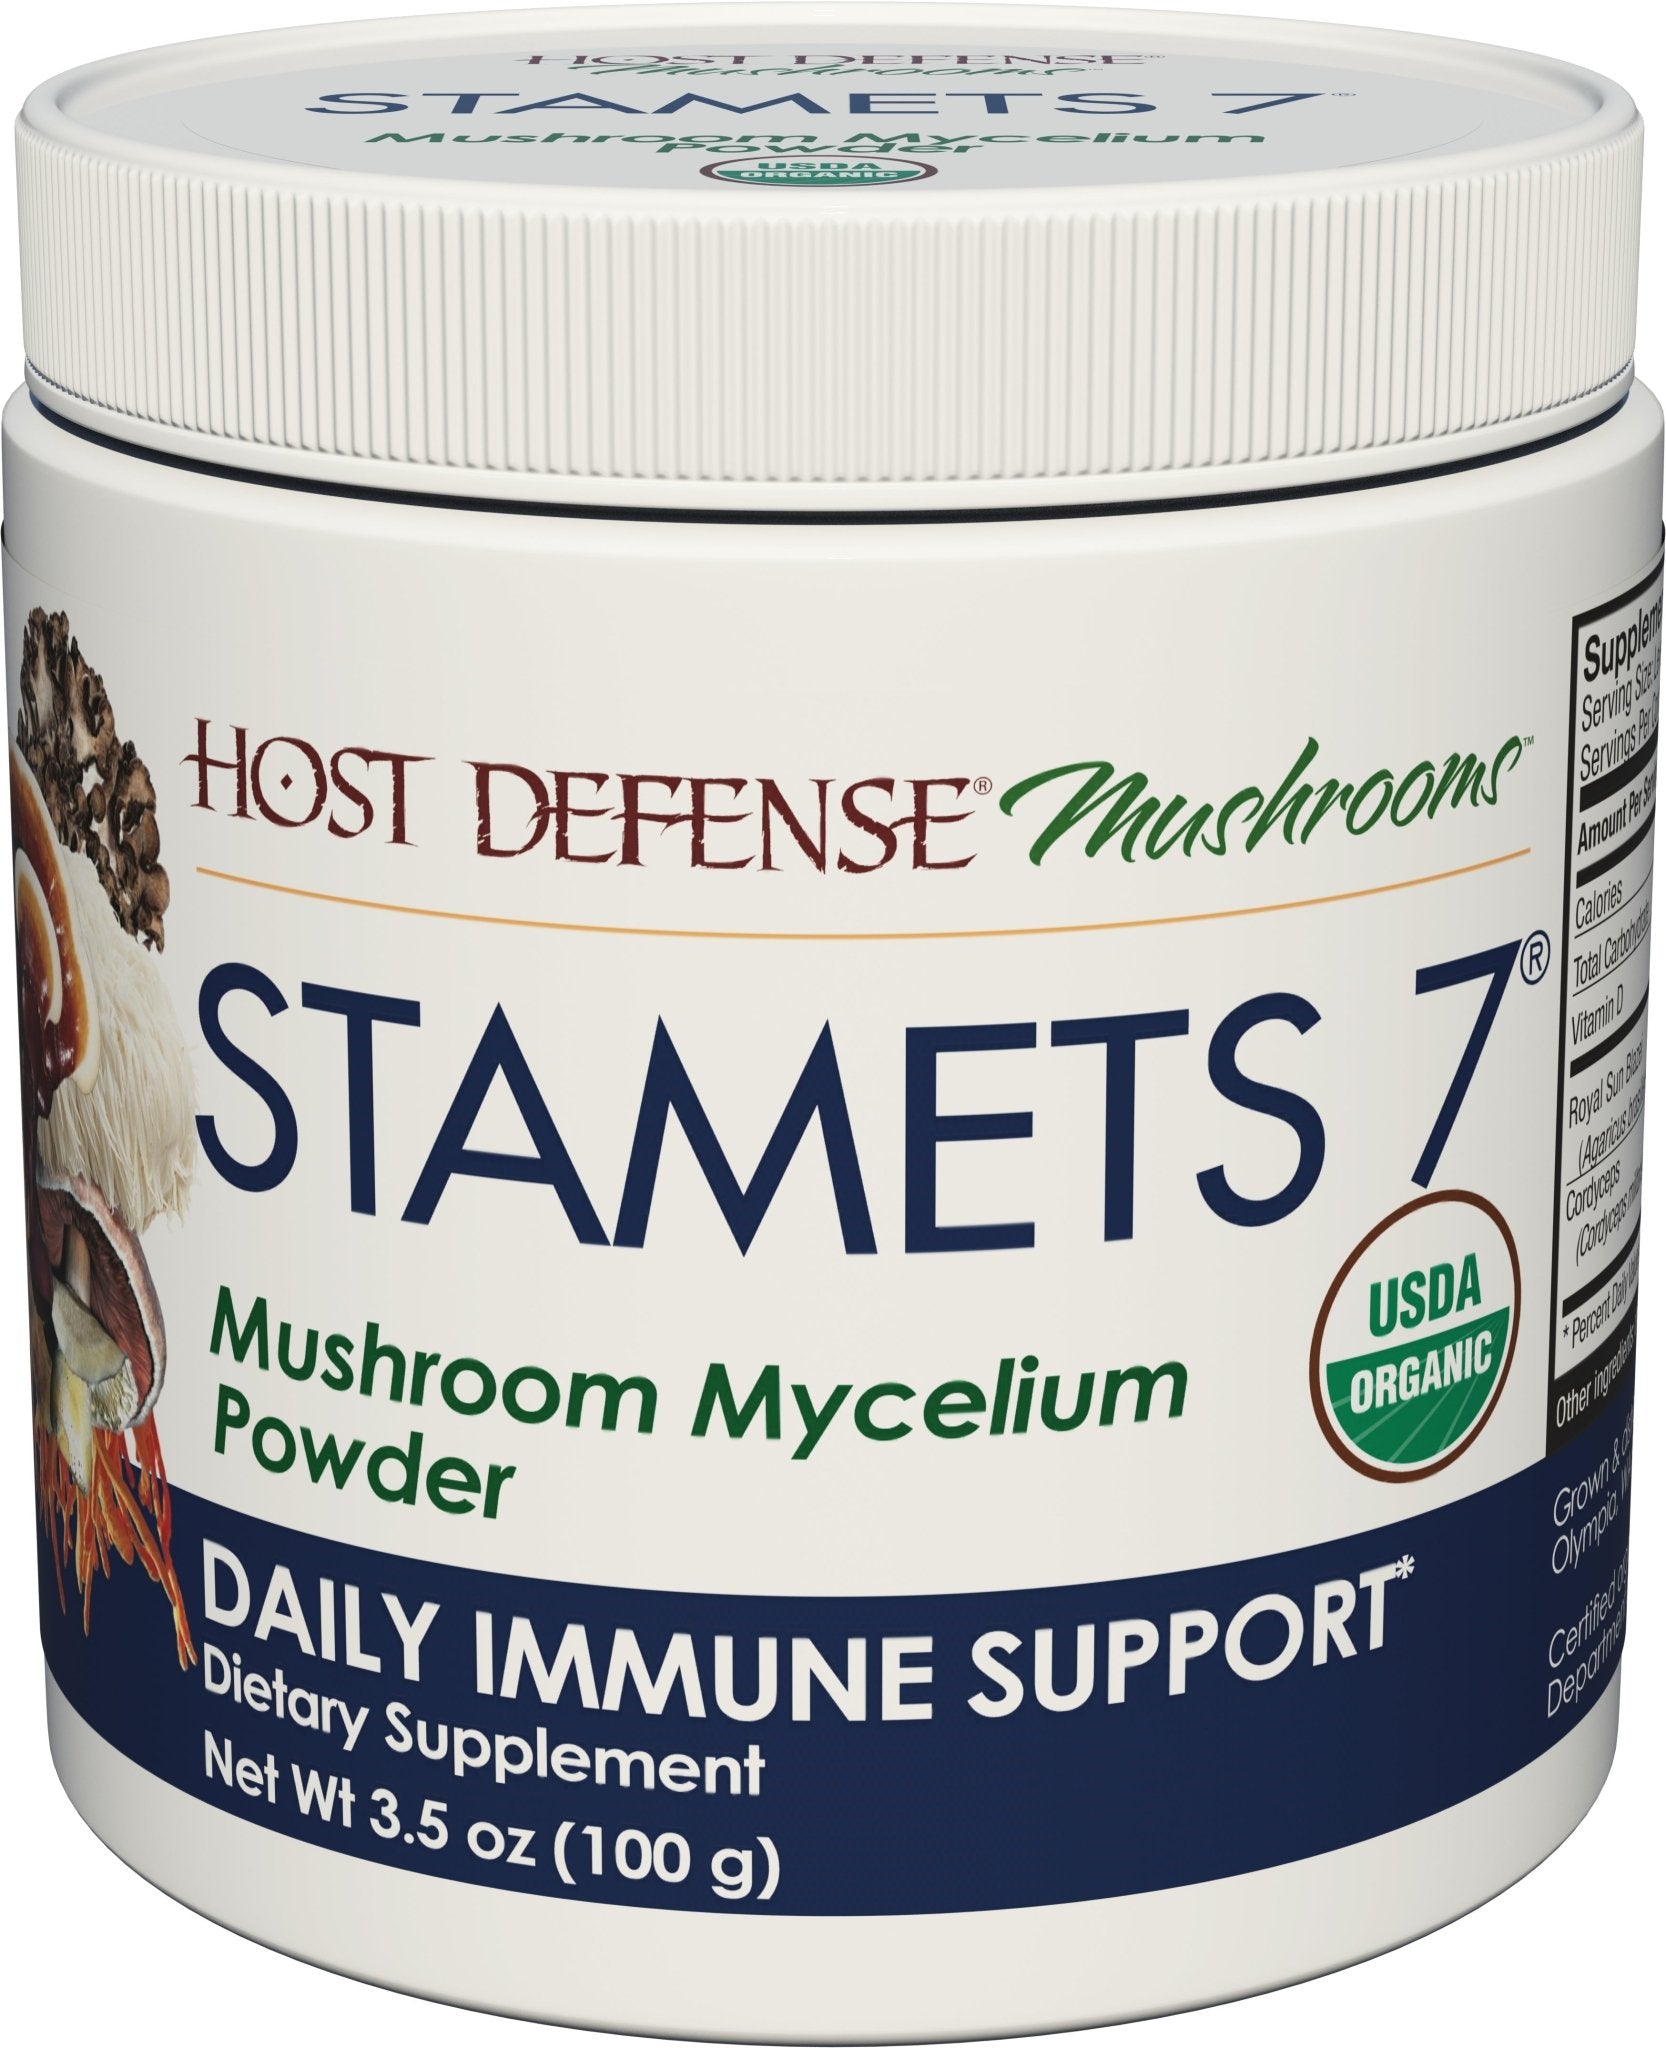 Stamets 7 Powder - Trichome Seattle - Host Defense - Fungi